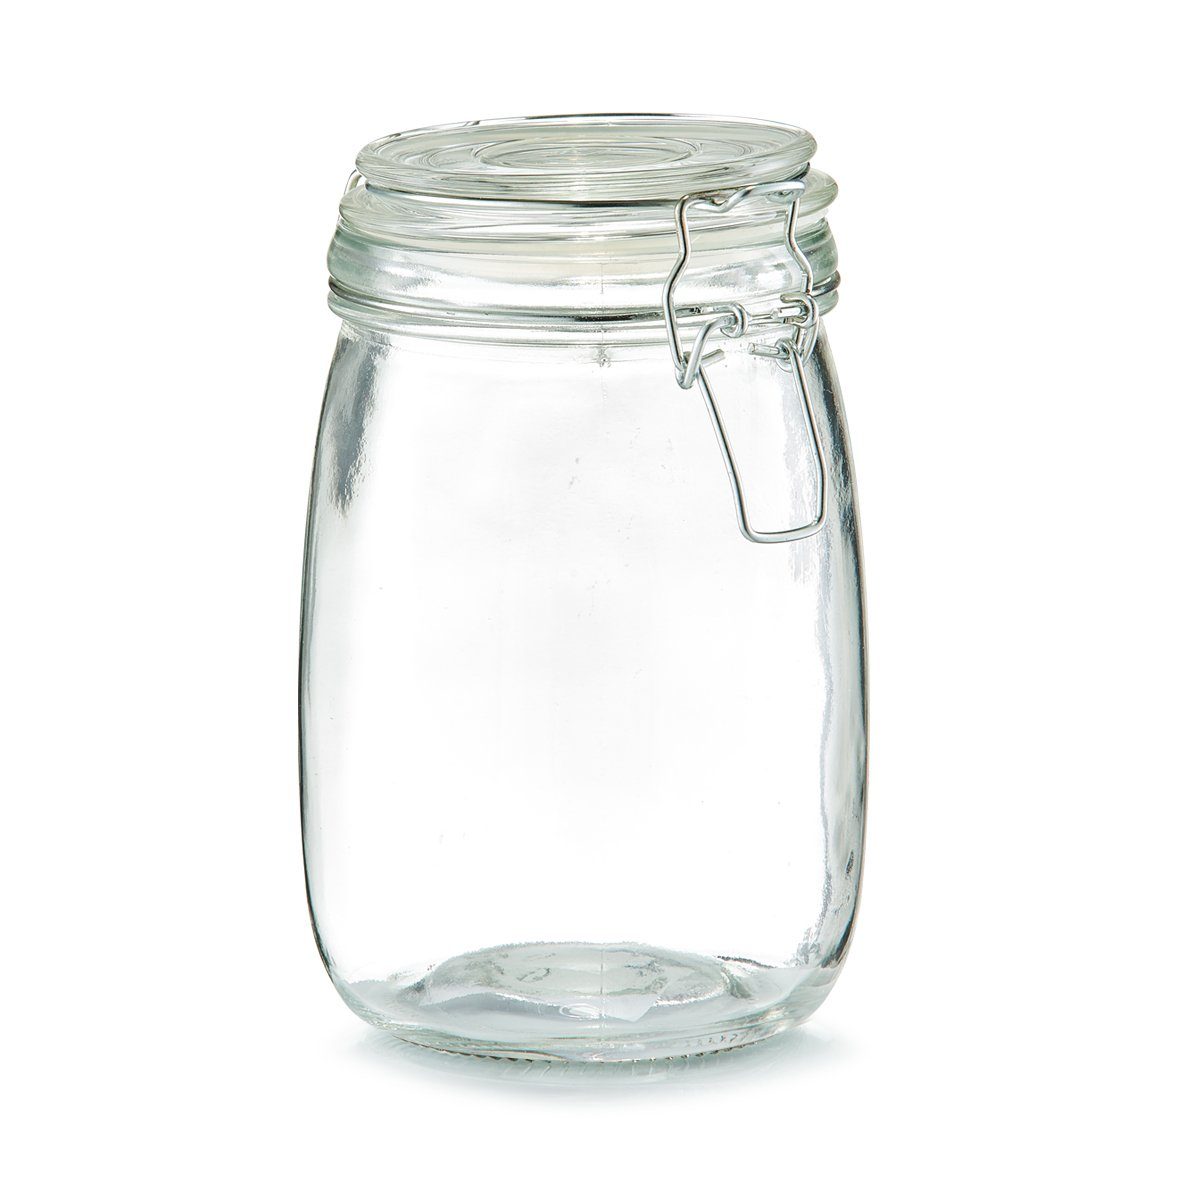 cm 17 m. Present 1000 Zeller Vorratsglas x Glas/Edelstahl, transparent, Ø11 ml, Bügelverschluss, Glas/Edelstahl, Vorratsglas